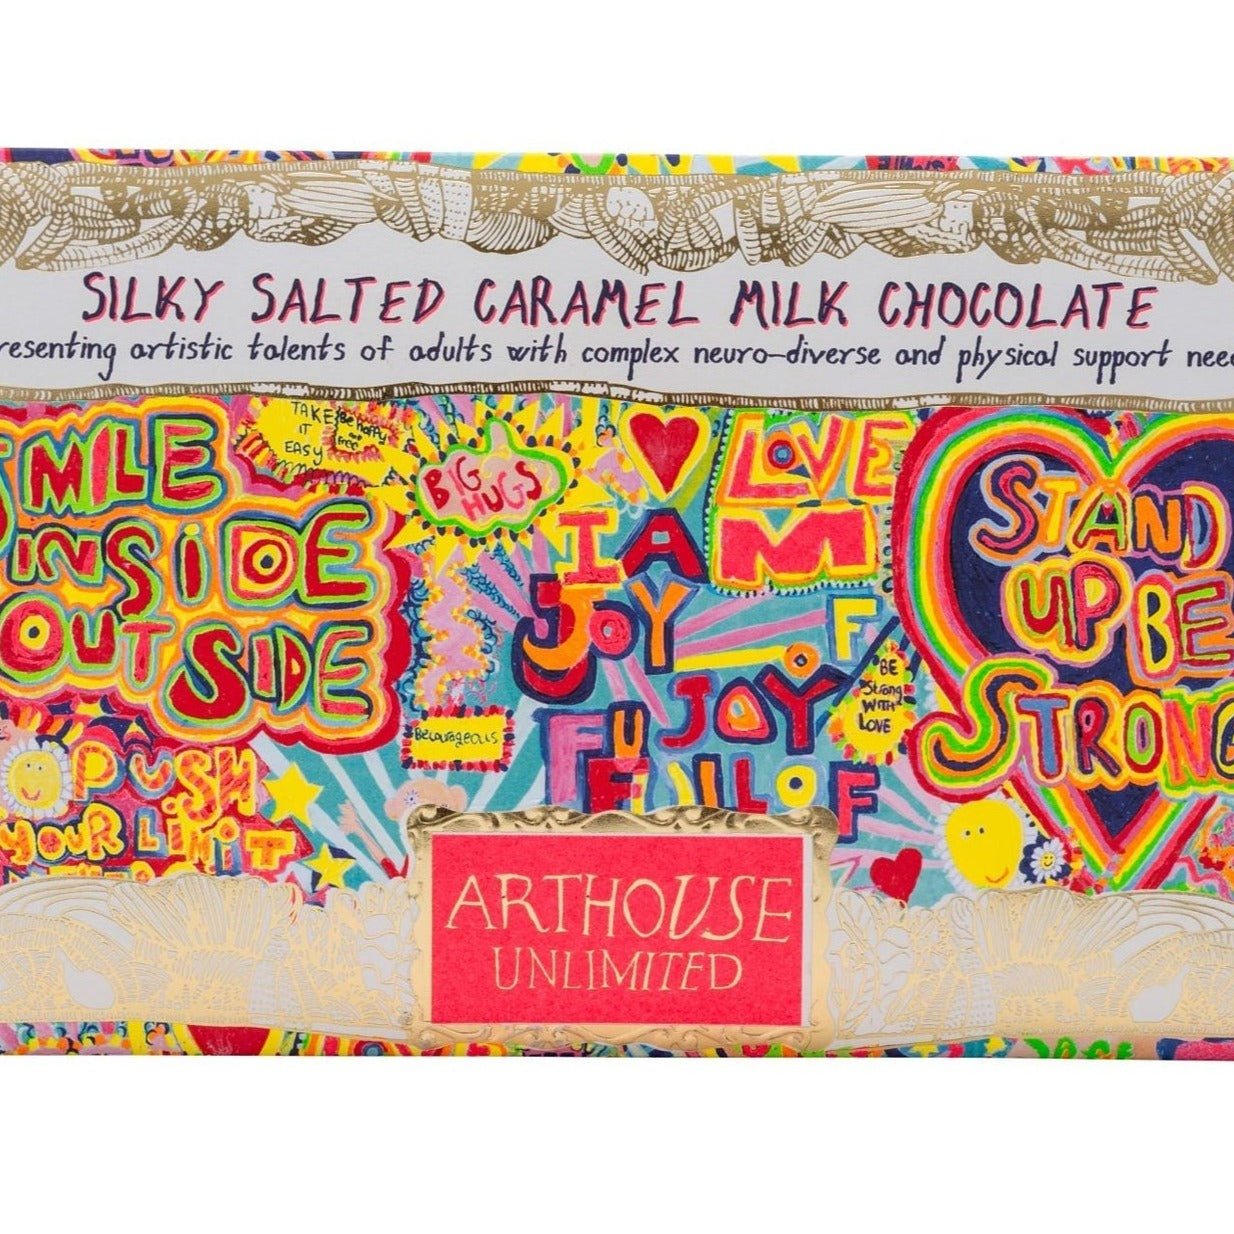 Arthouse Unlimited Chocolate - Full of Joy Silky Salted Caramel Milk Chocolate